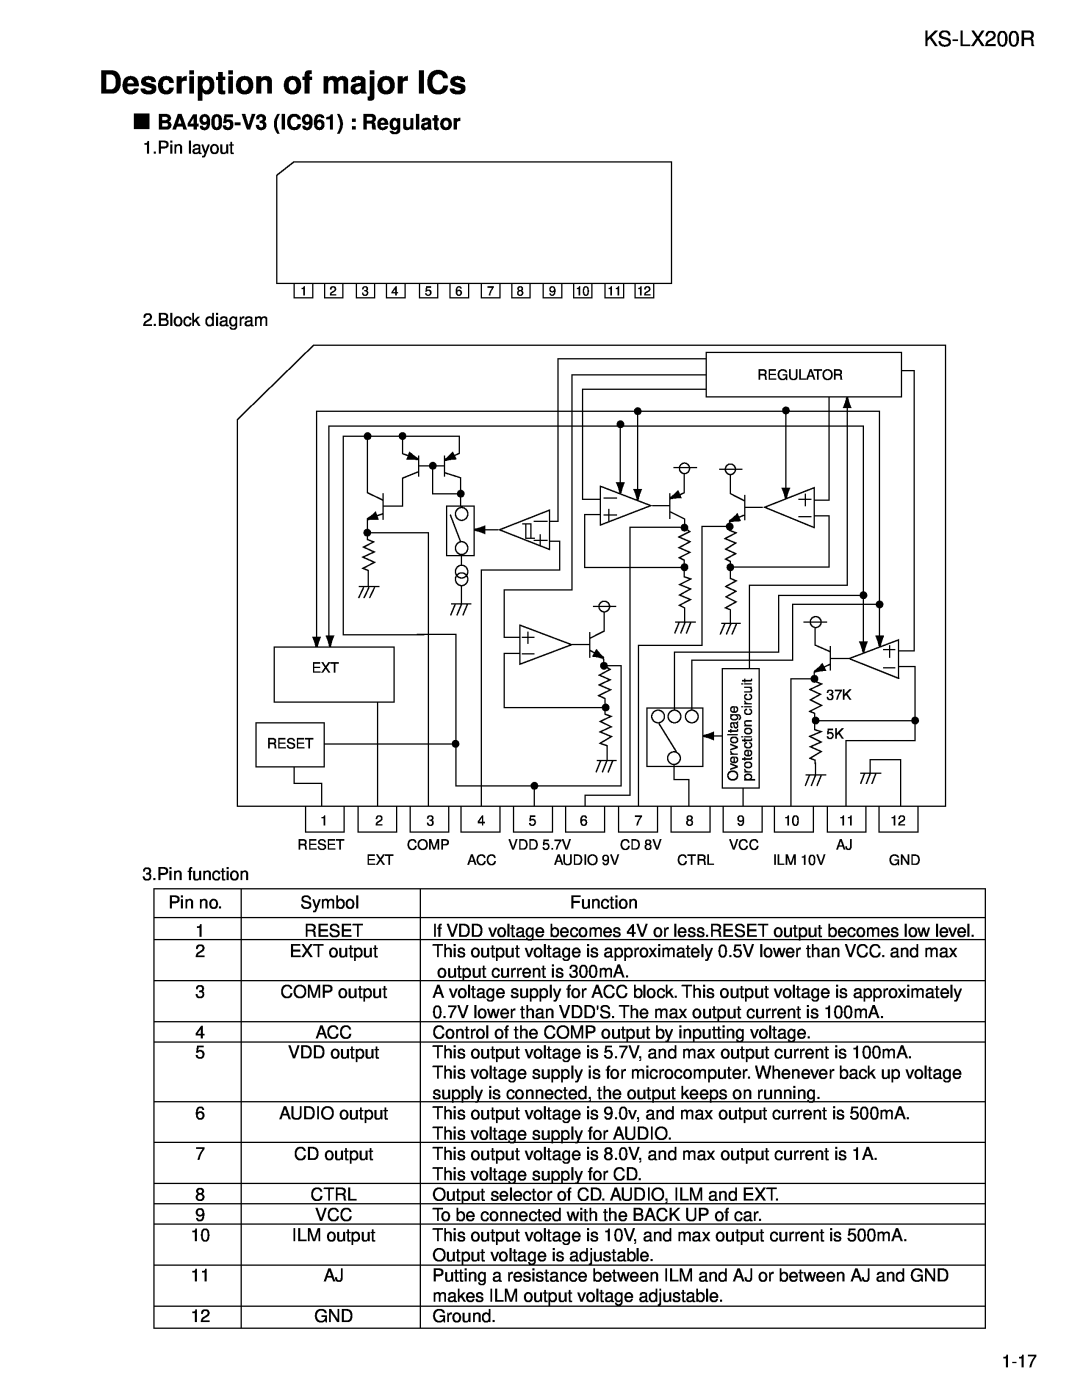 JVC KS-LX200R service manual Description of major ICs, BA4905-V3IC961 Regulator 